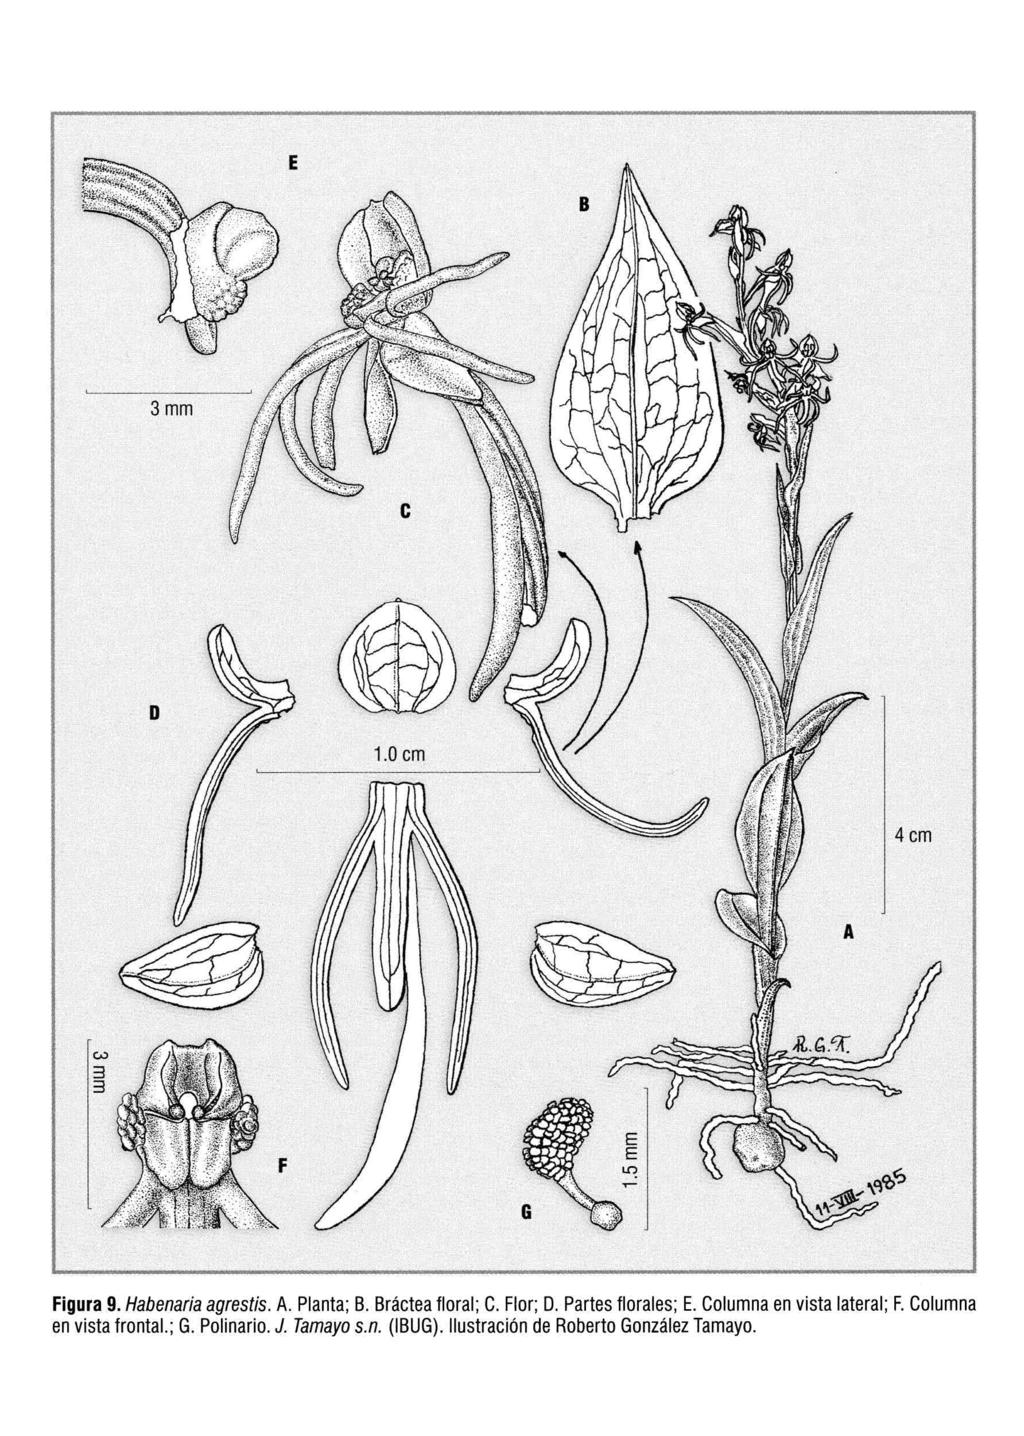 E 3mm 4cm A ~ E E. l!") '-.:"..,...: G ':.:. "" ";;:0' Figura 9. Habenaria agrestis. A. Planta; B. Bráctea floral; C. Flor; D.